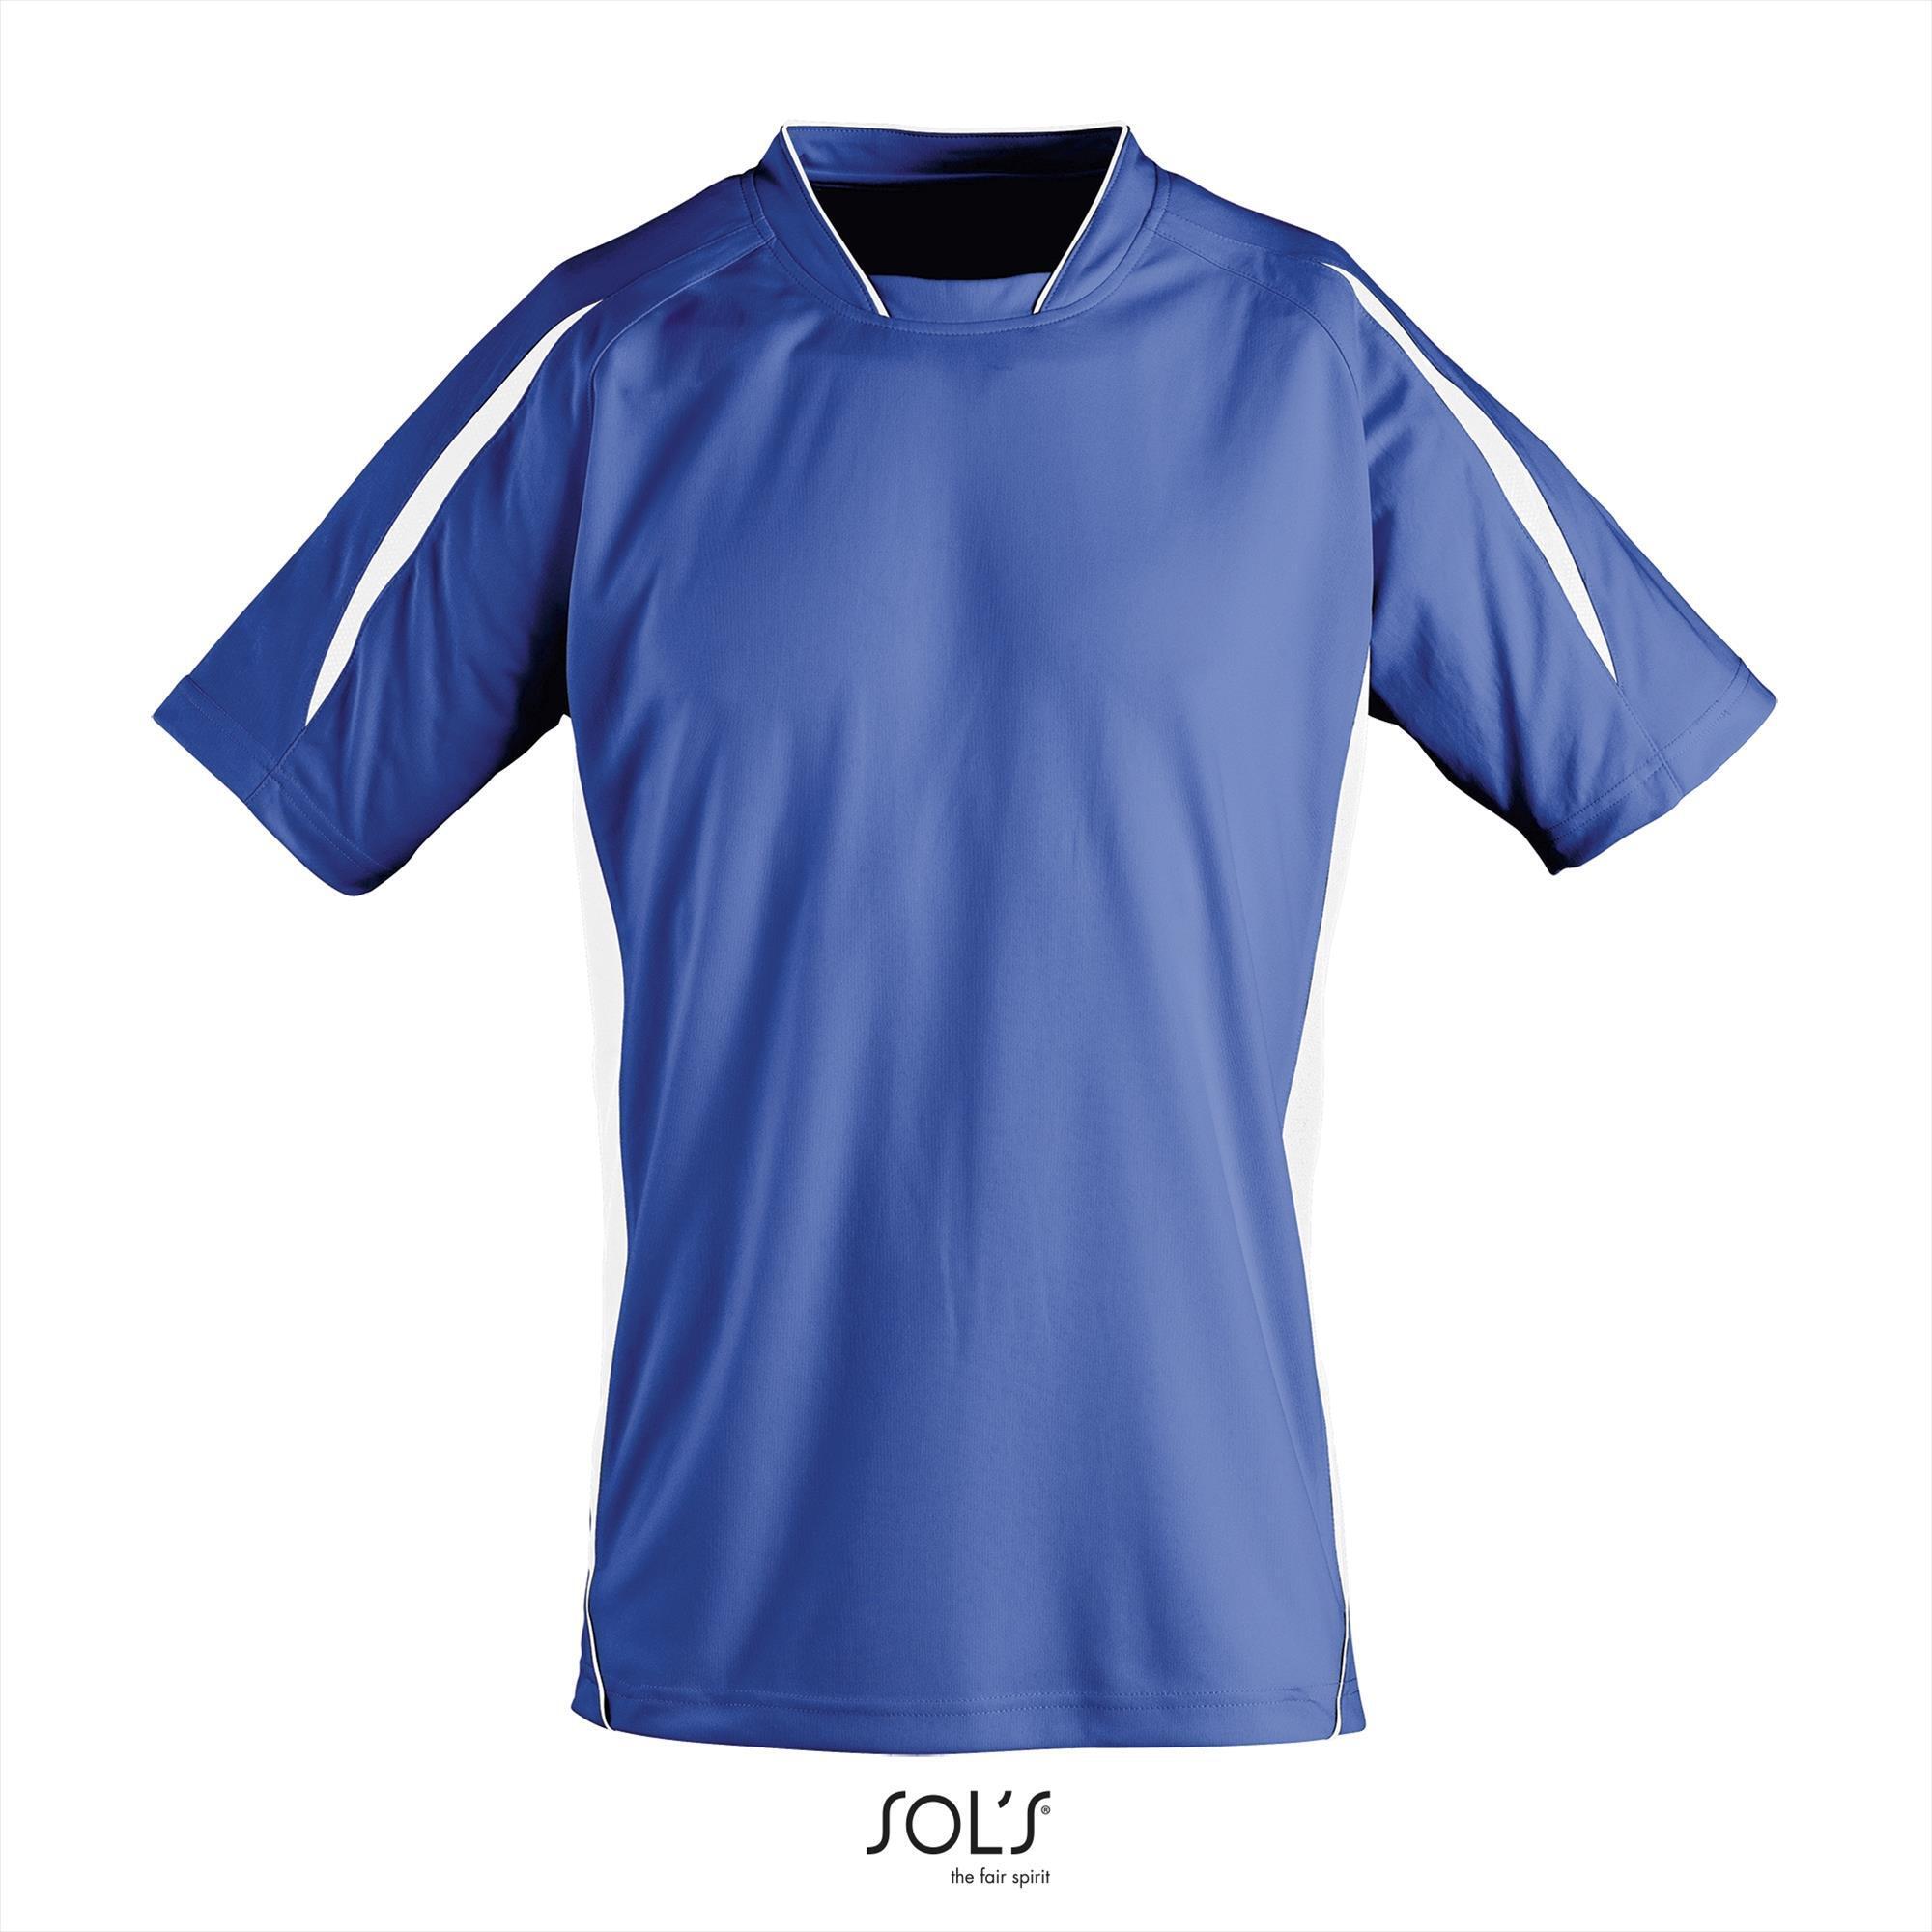 Kinder sportshirt royal blauw met wit sportief sport shirt personaliseren sport shirt